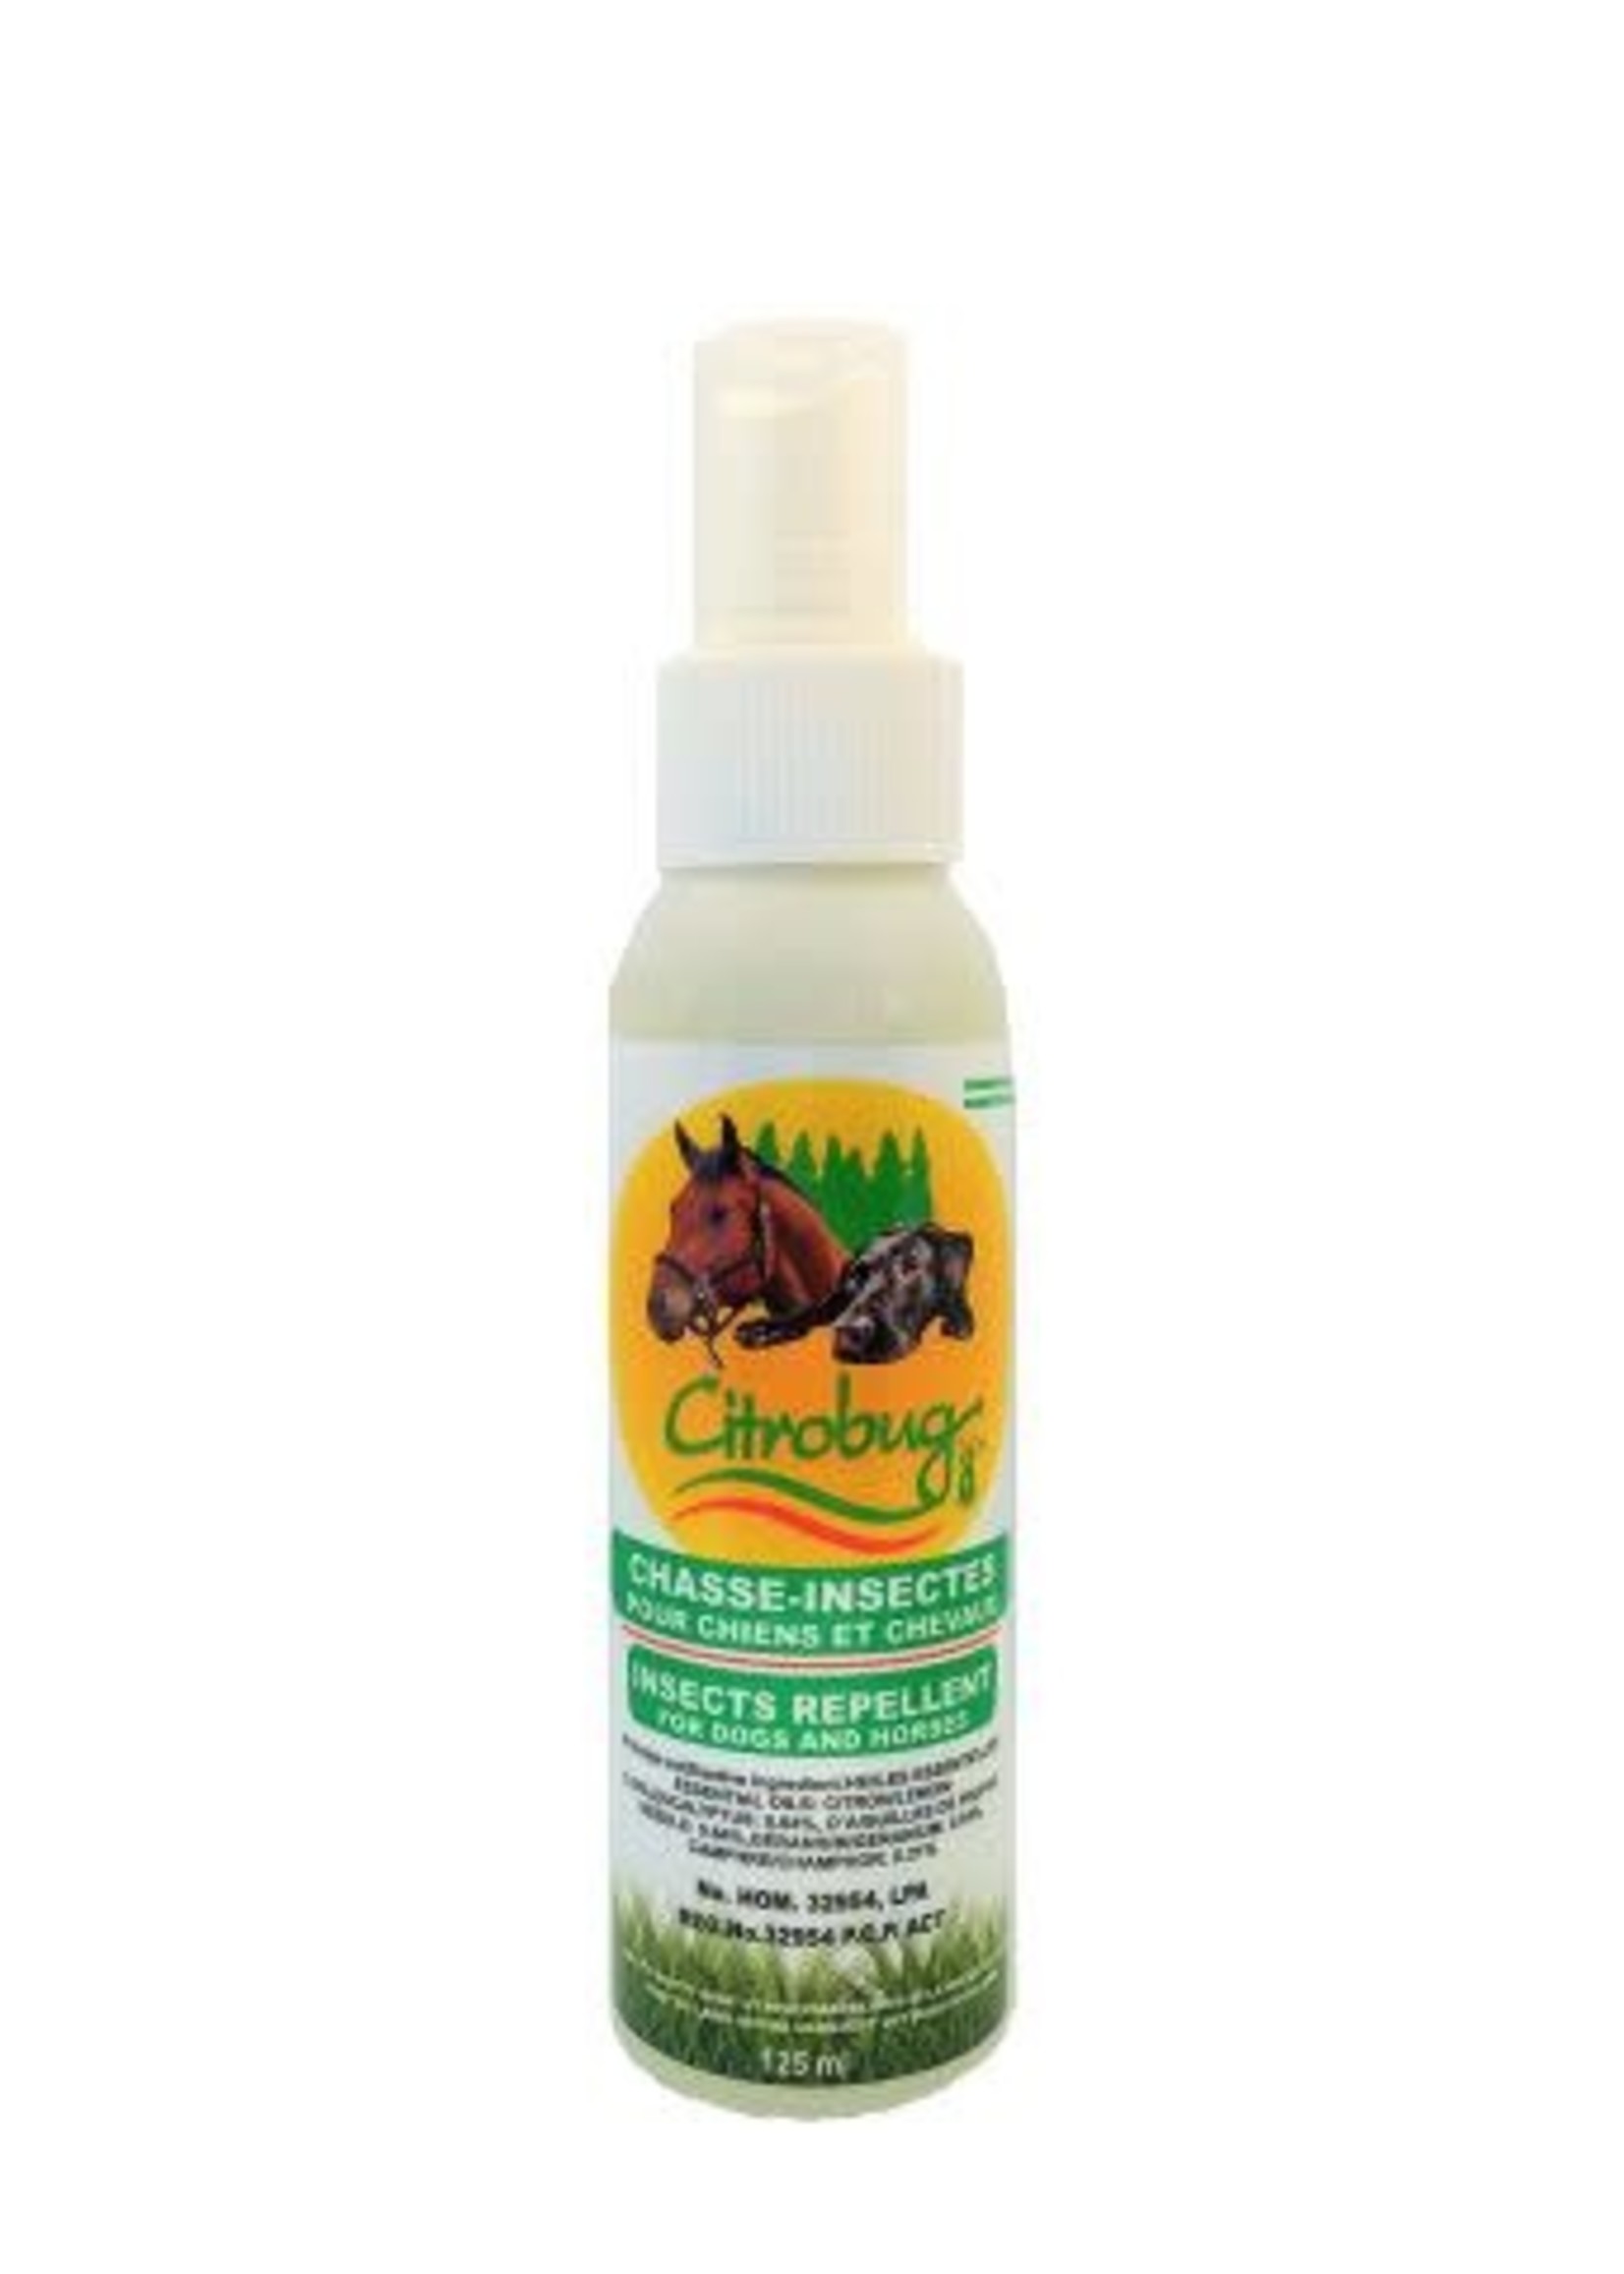 Citrobug Citrobug Insect Repellant For Dogs & Horses-125mL